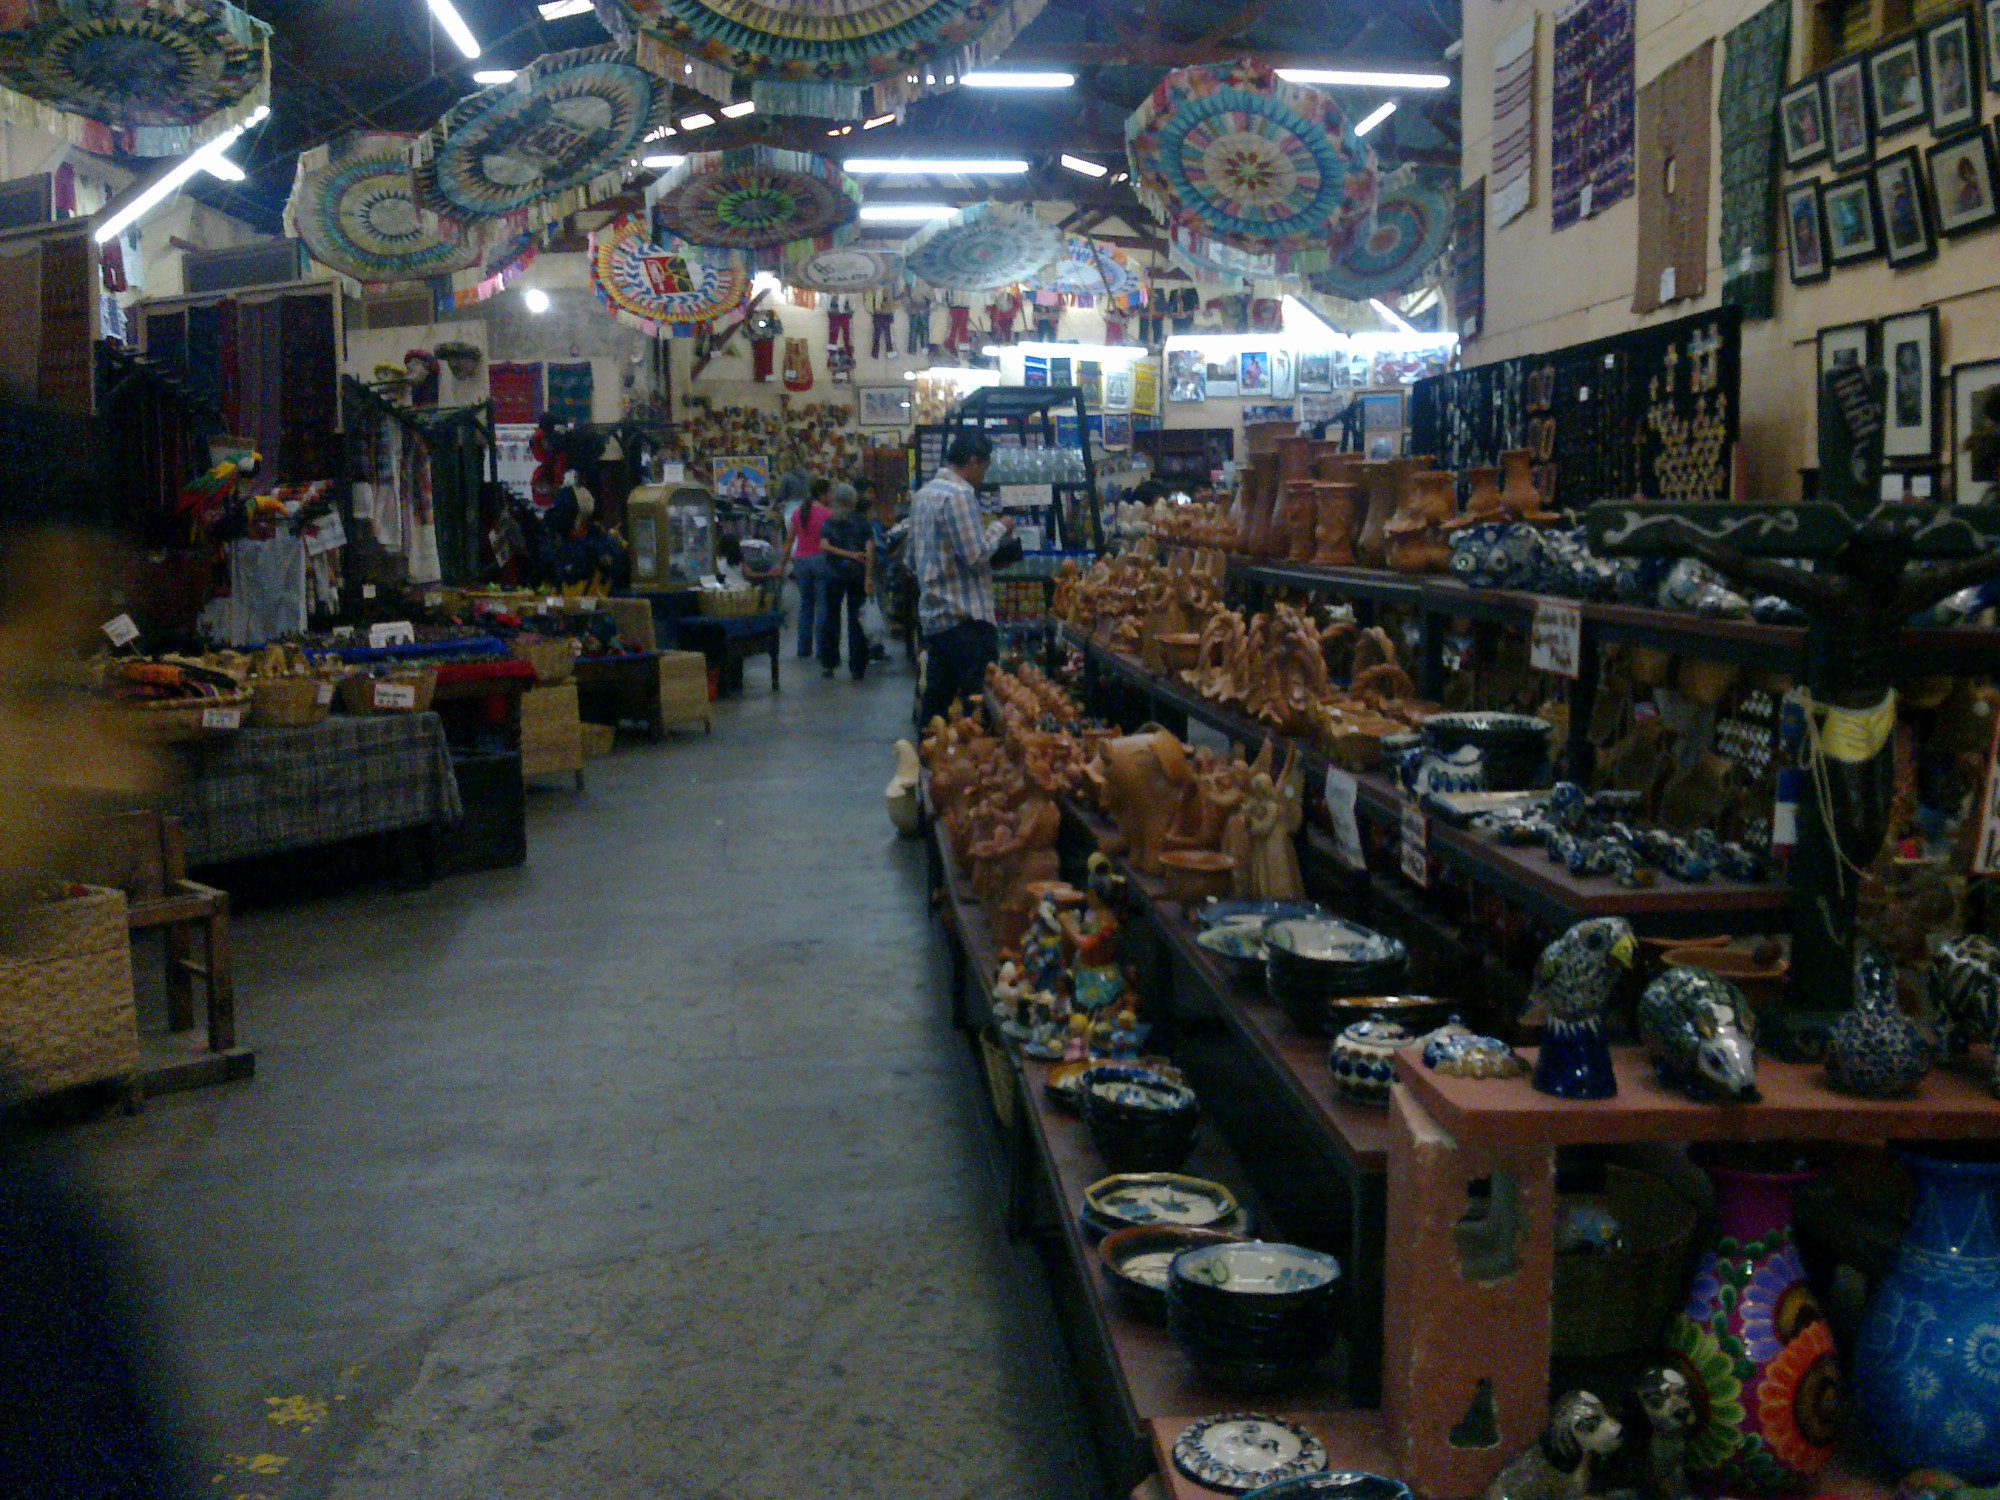 market of souvenirs (Antigua, Guatemala)